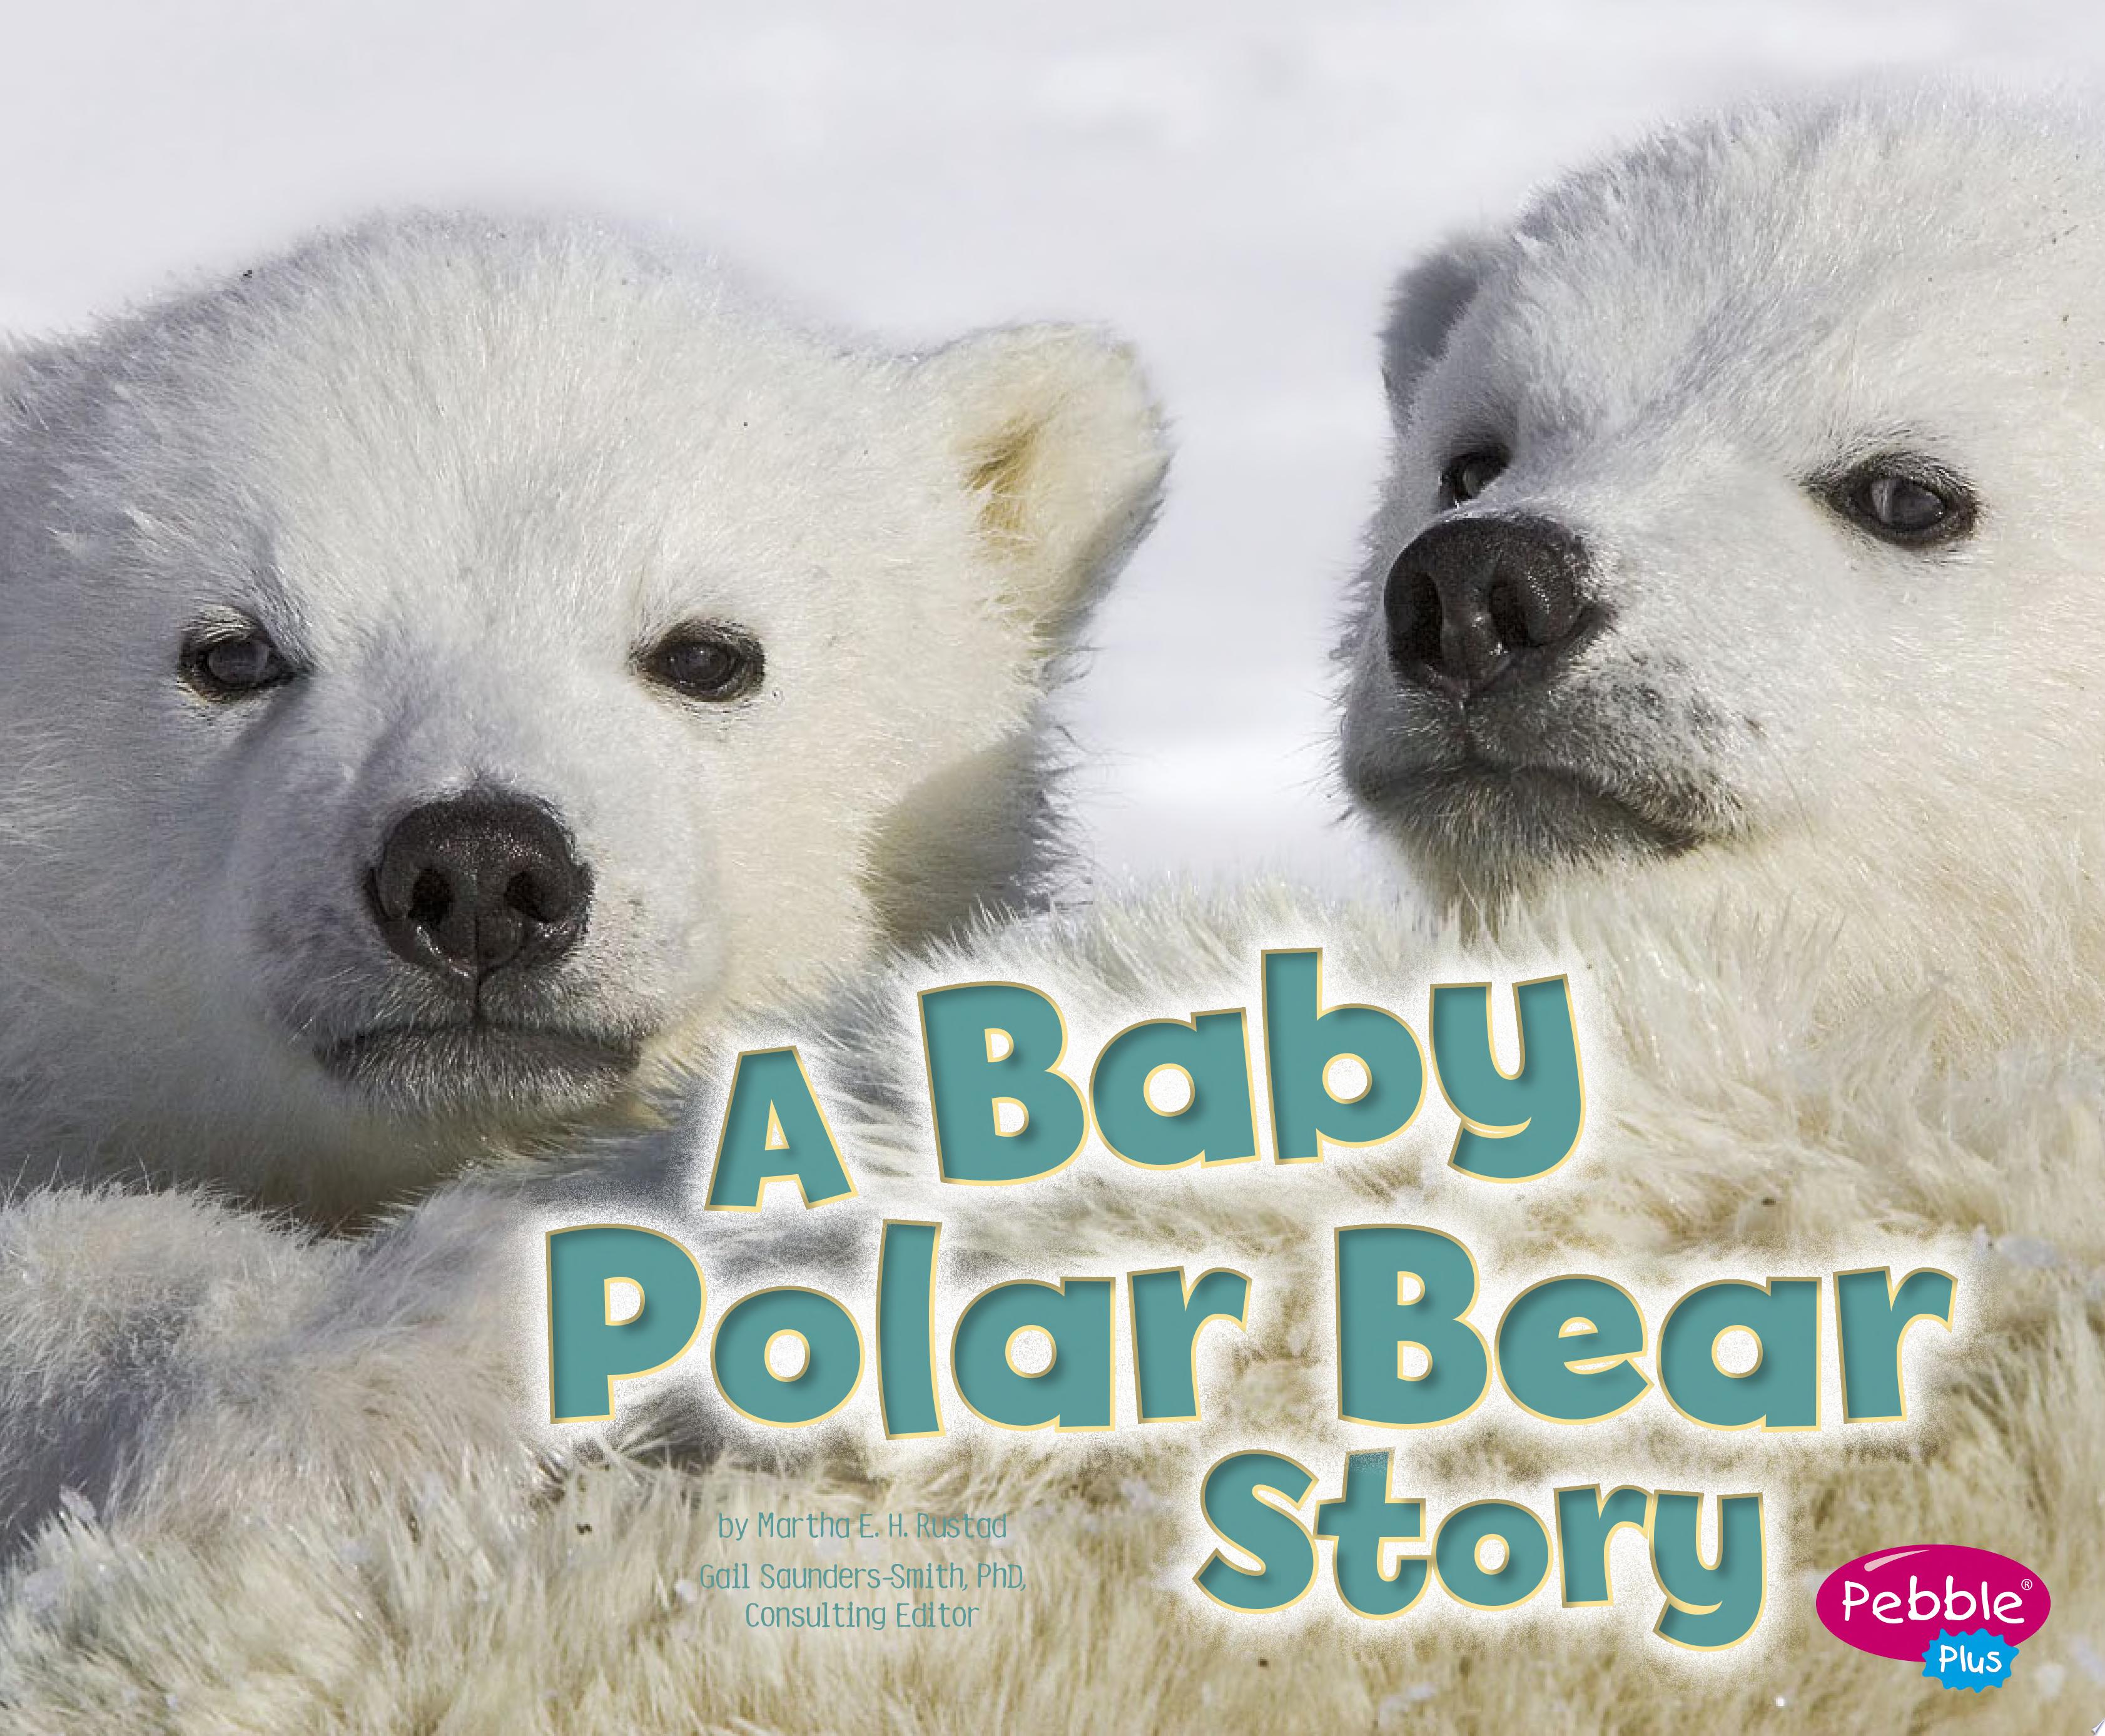 Image for "A Baby Polar Bear Story"